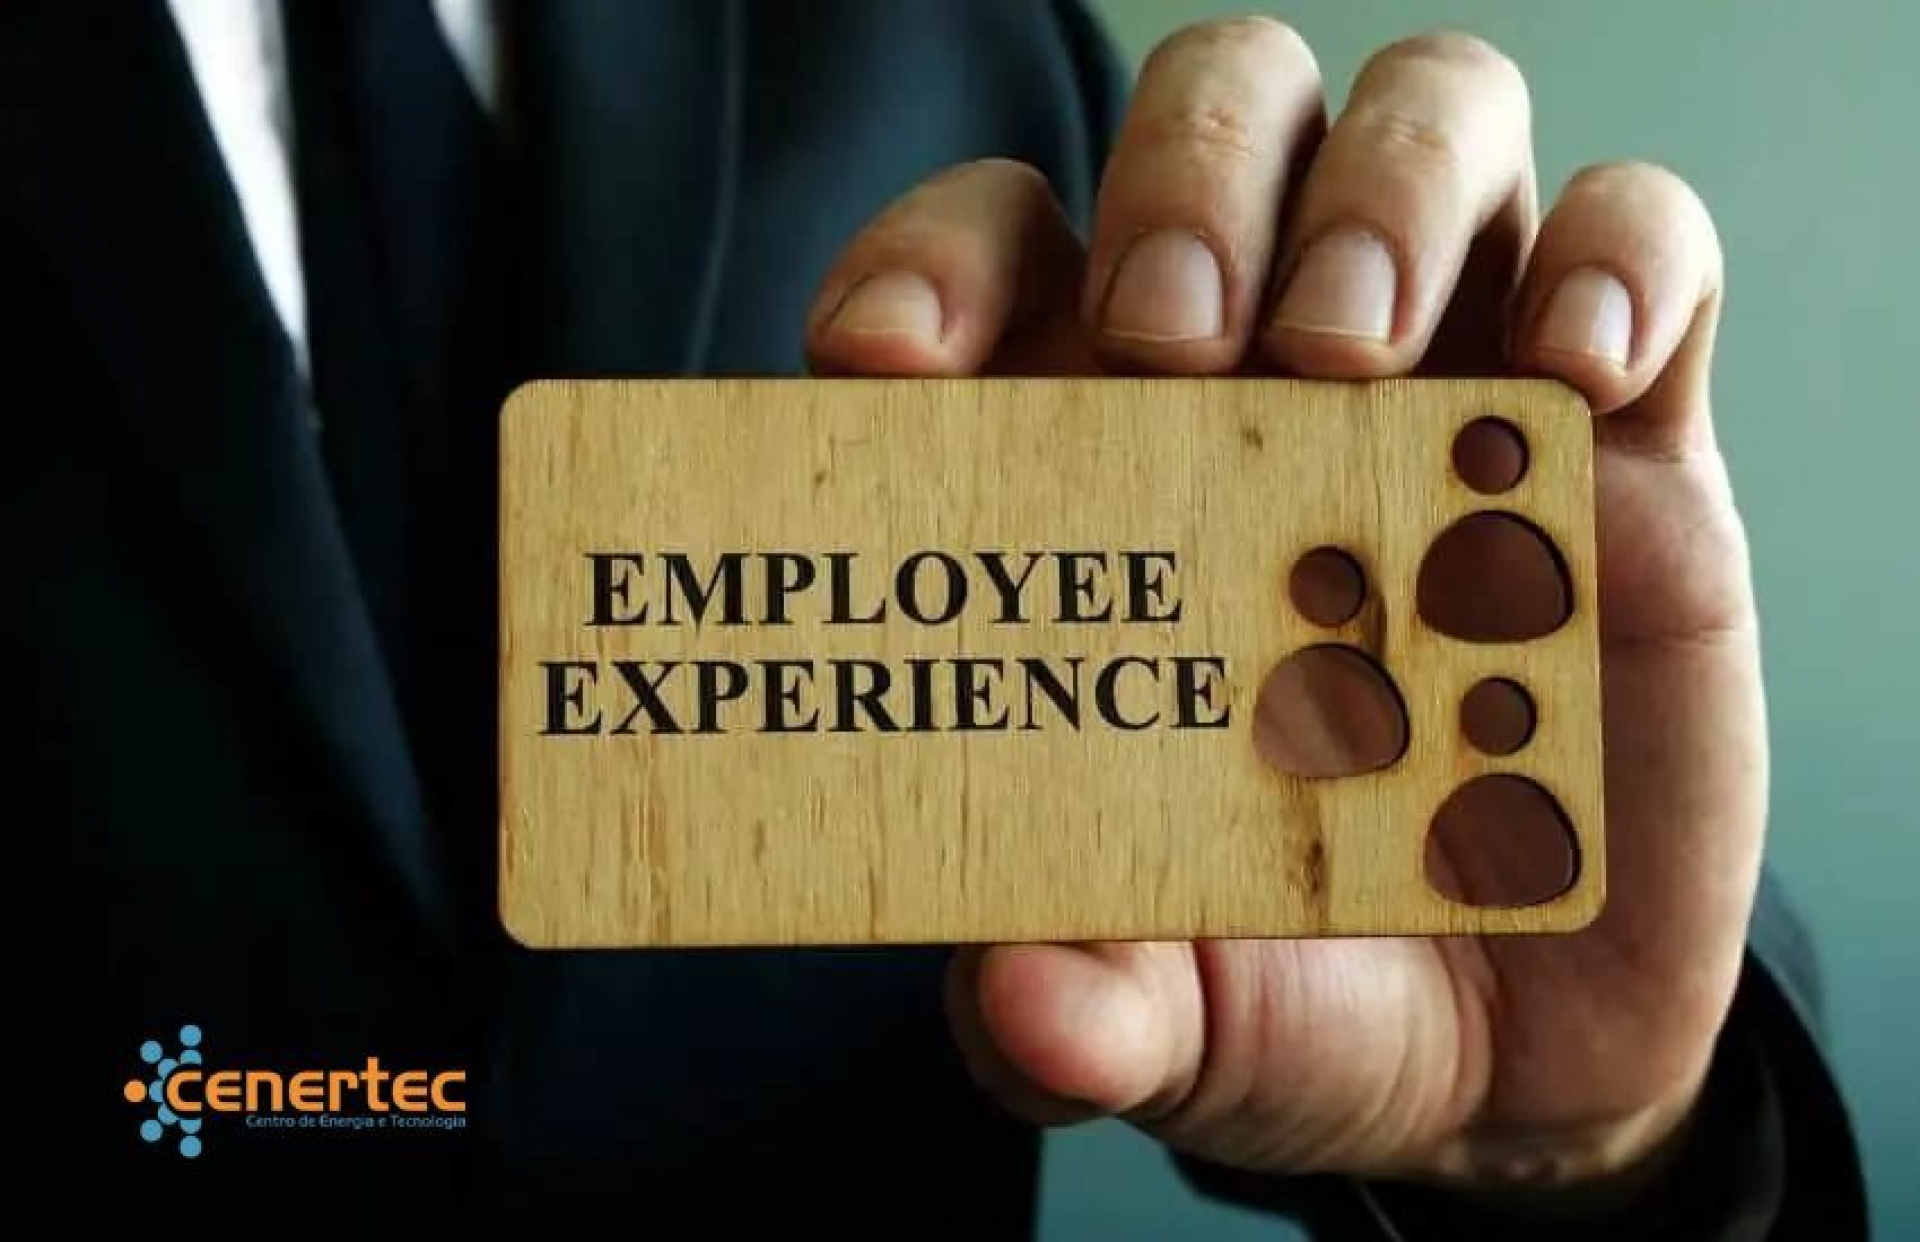 Employee Experience